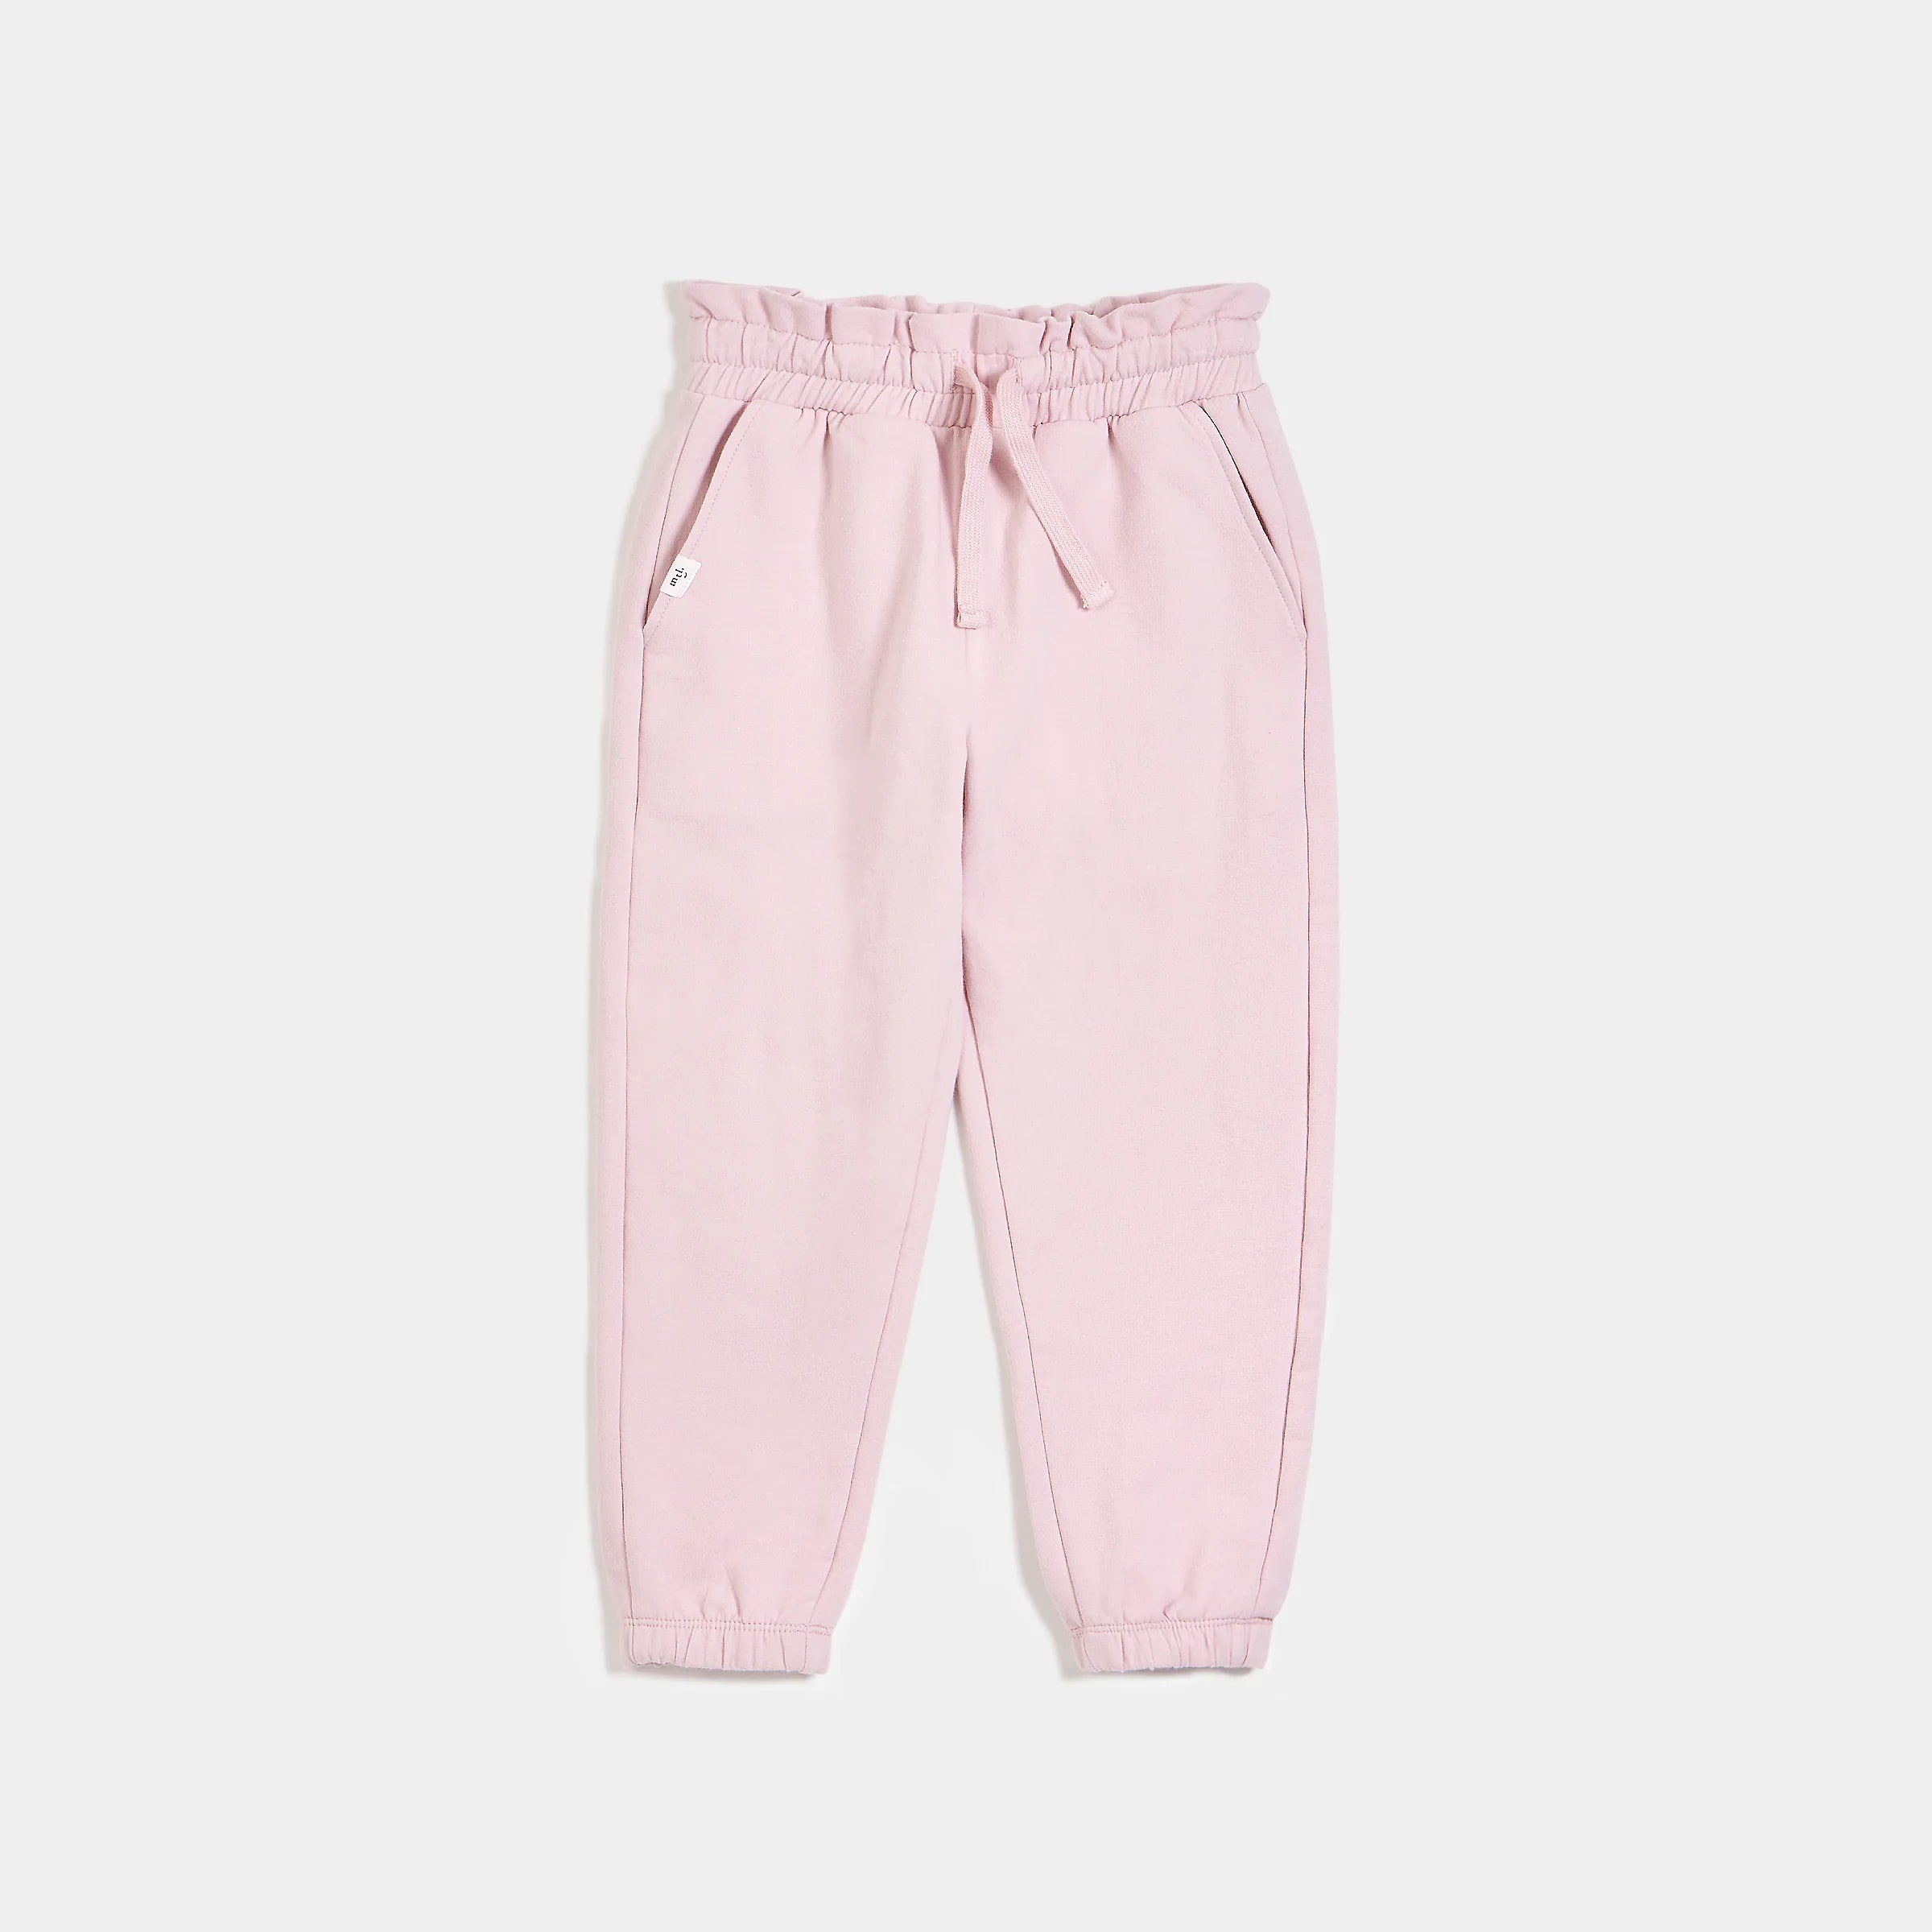 Basic Joggers - Cloudy Pink Paper bag Waist